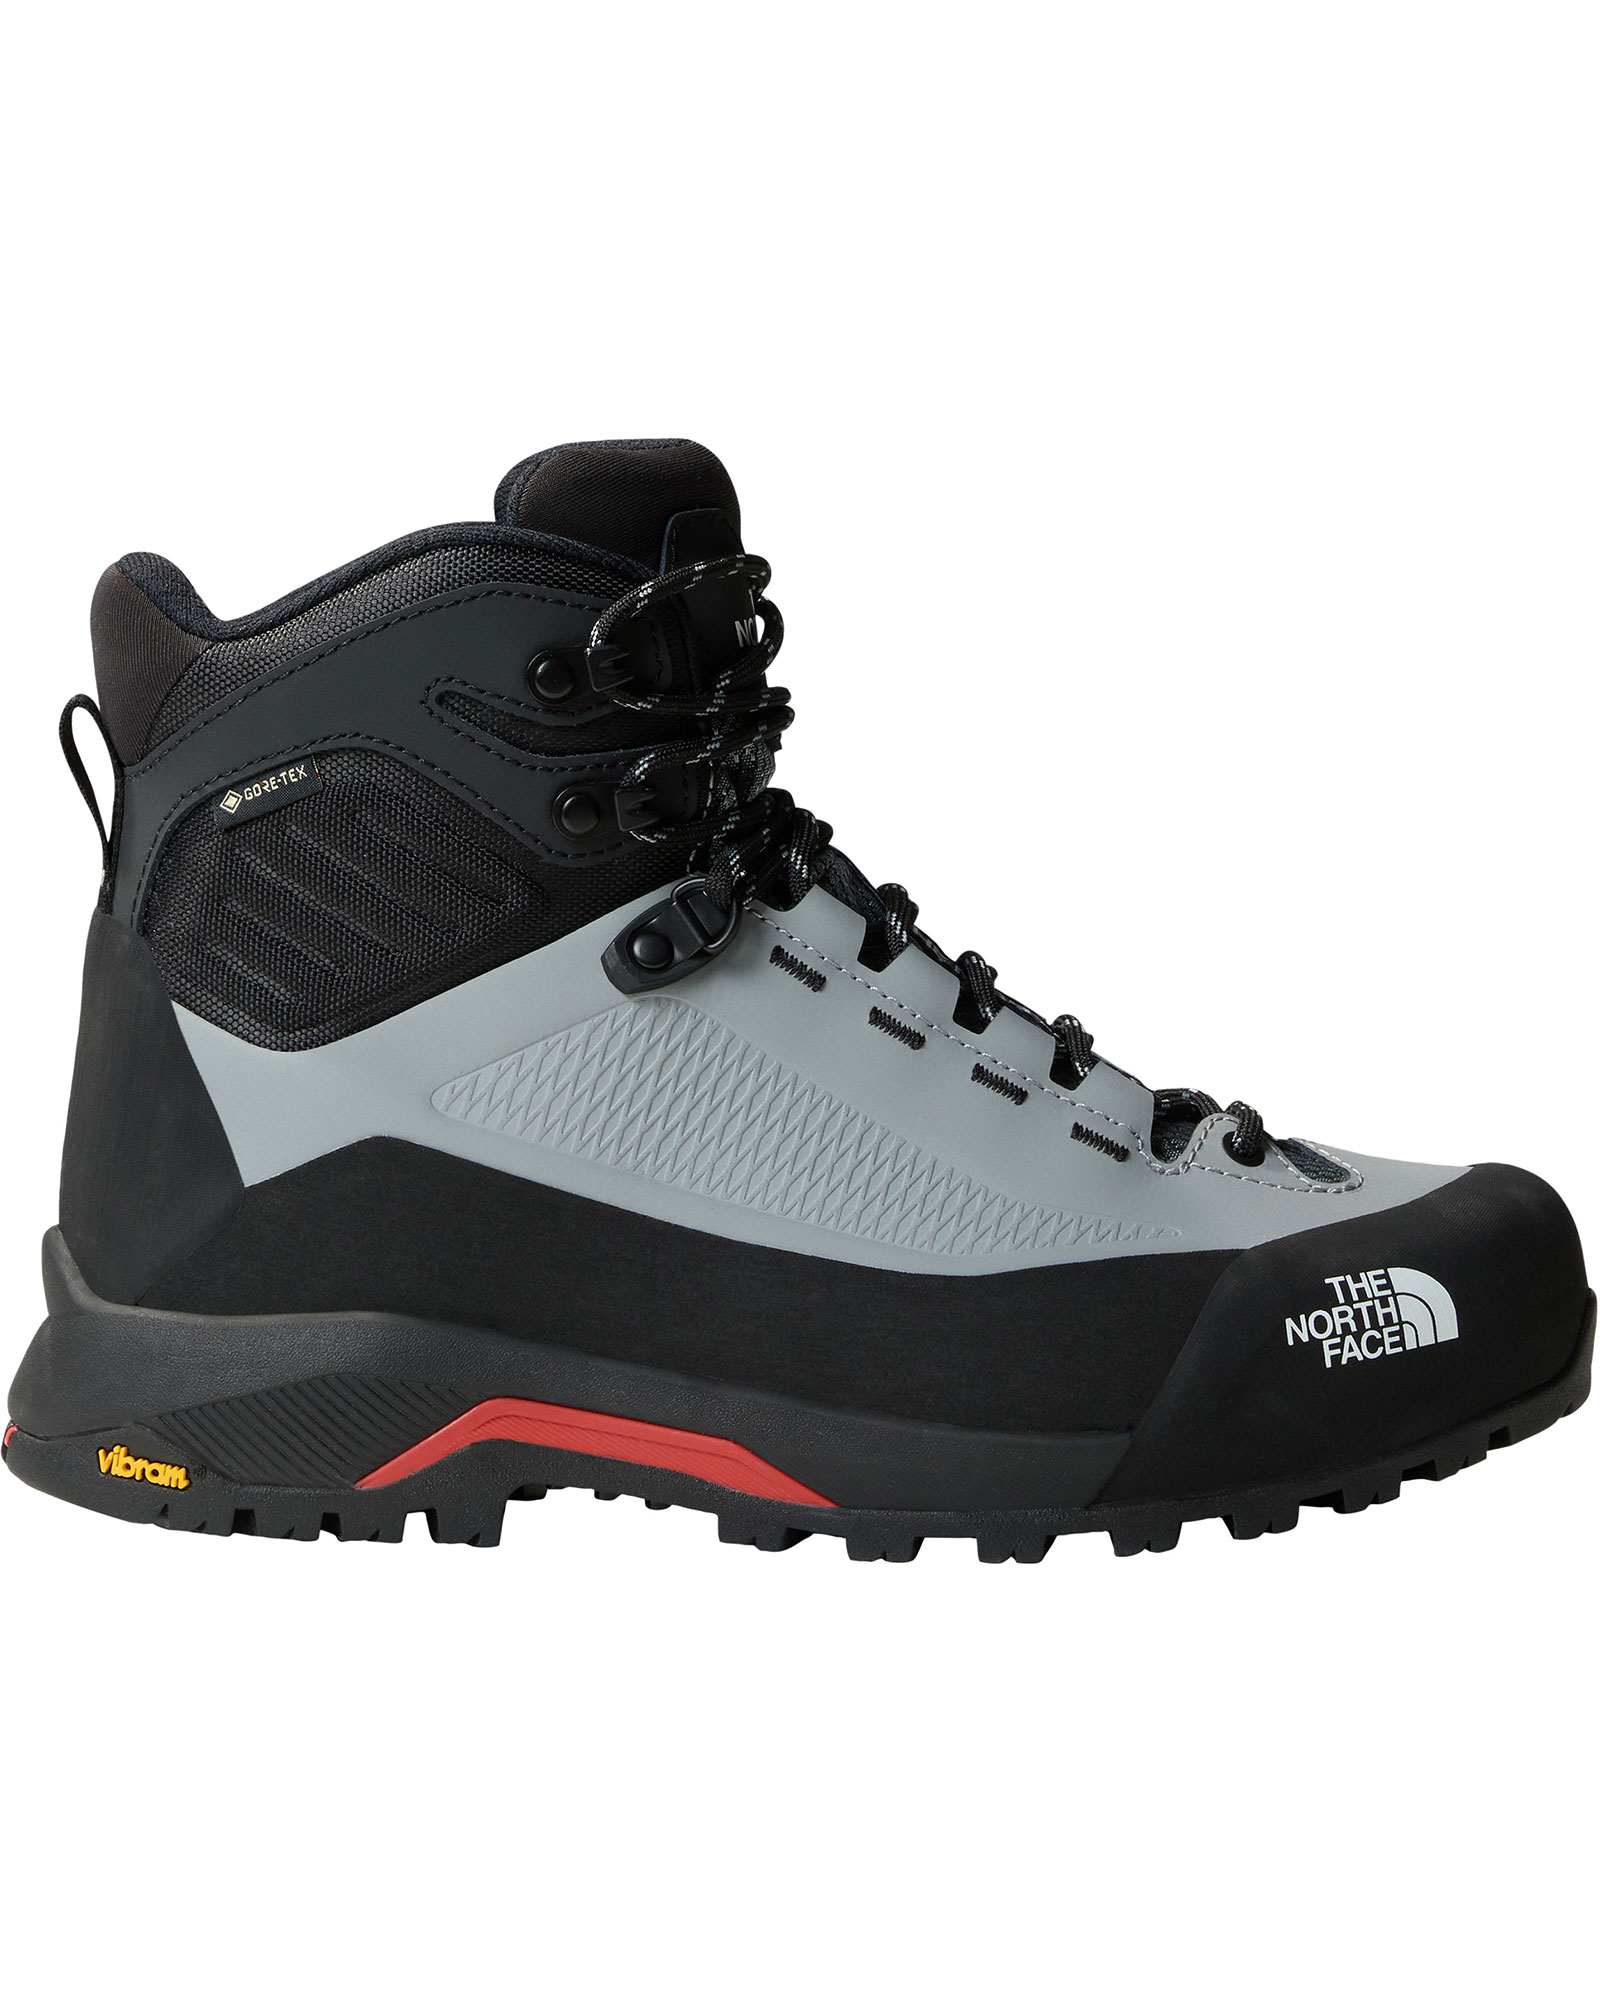 The North Face Women's Verto Alpine Mid GORE-TEX Walking Boots